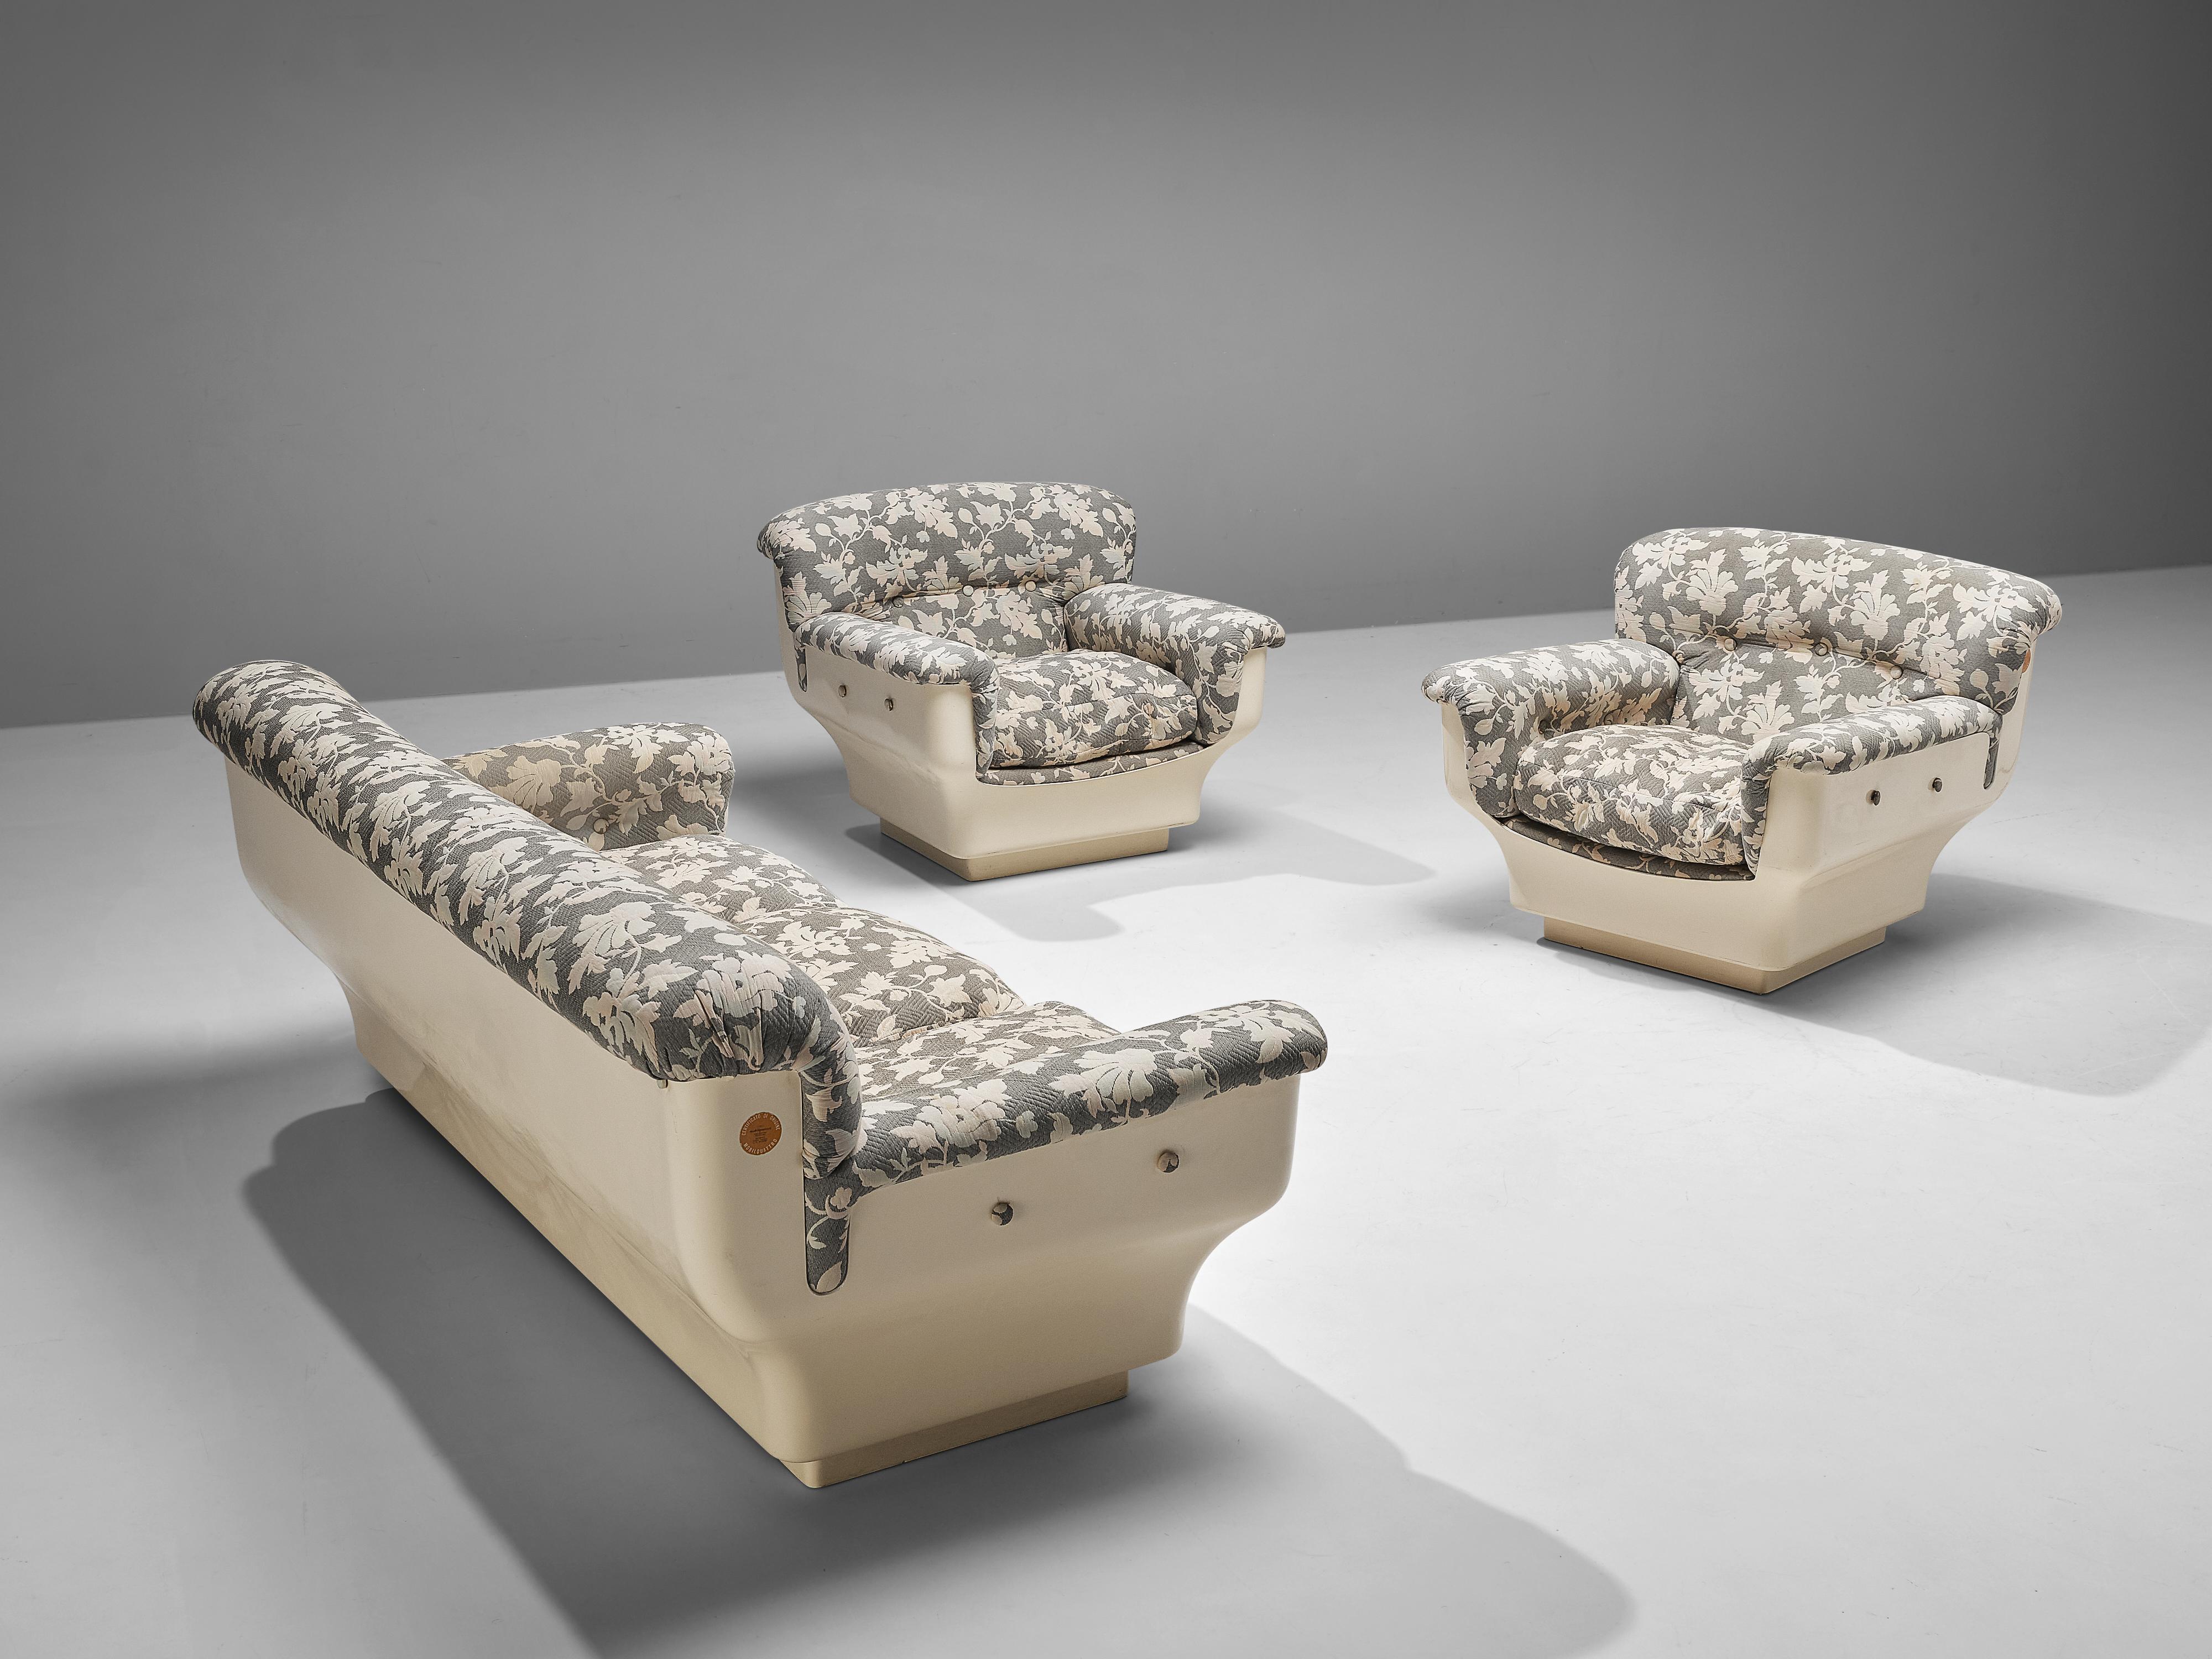 Studio Tecnico for Mobilquattro ‘Delta 699’ Sofa in Floral Upholstery For Sale 3